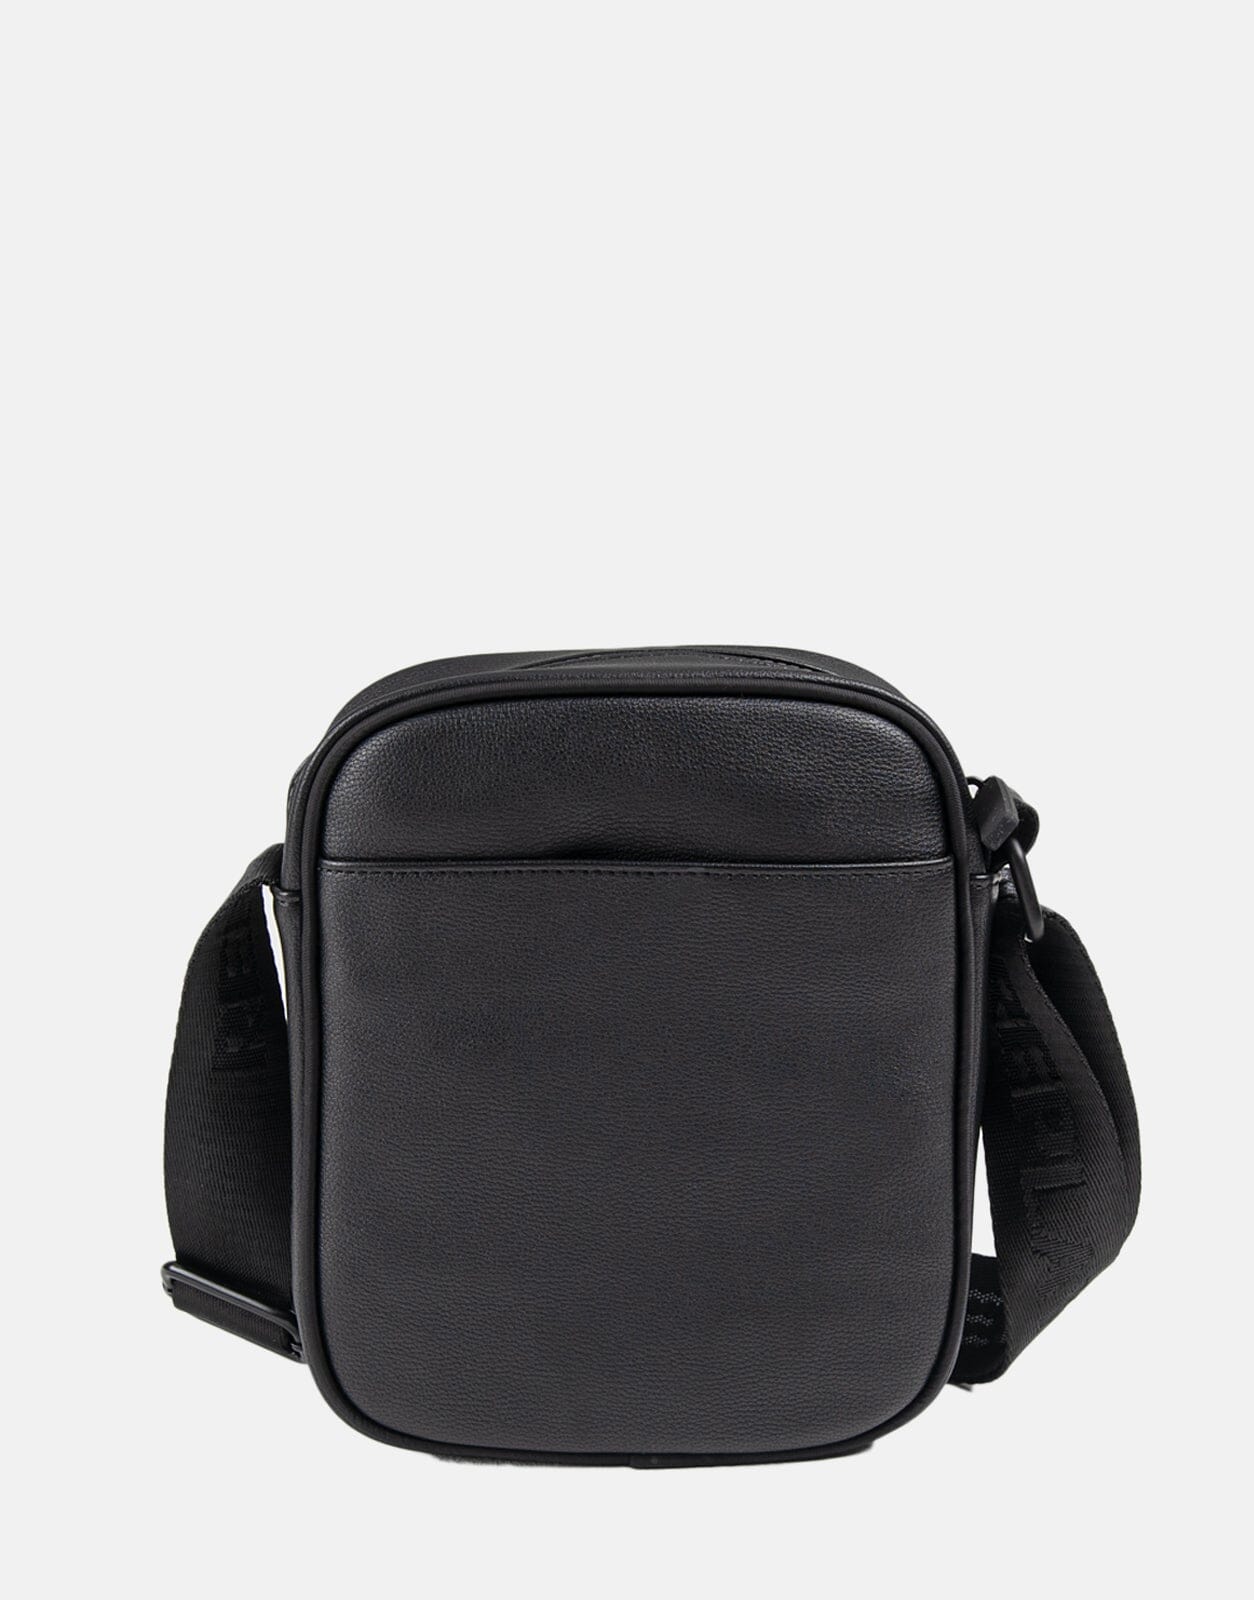 Replay Black Side Bag - Subwear